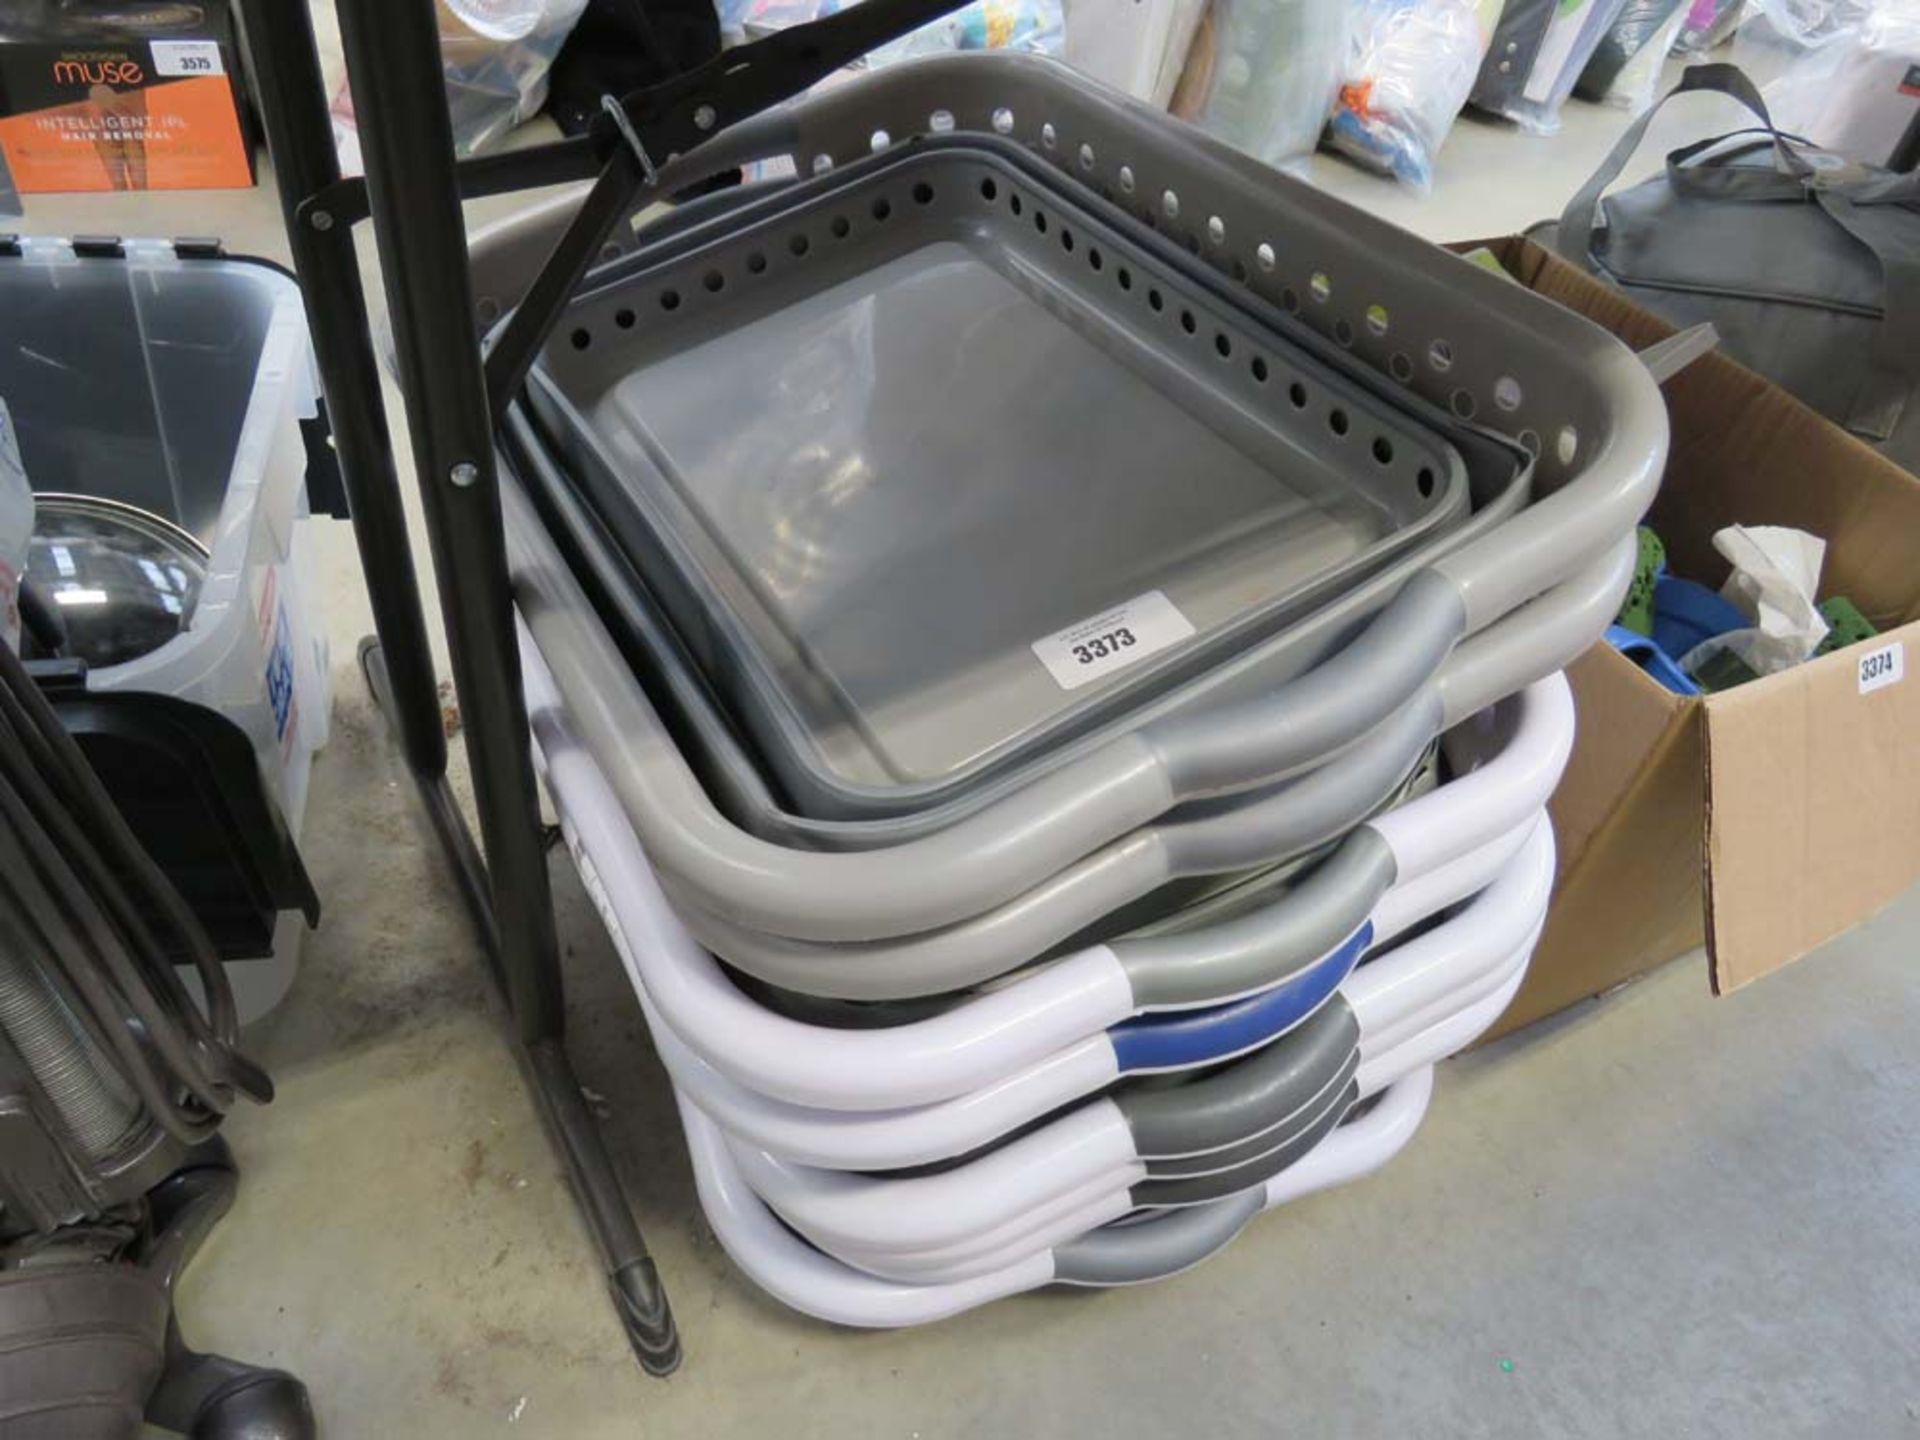 8 expandable laundry baskets